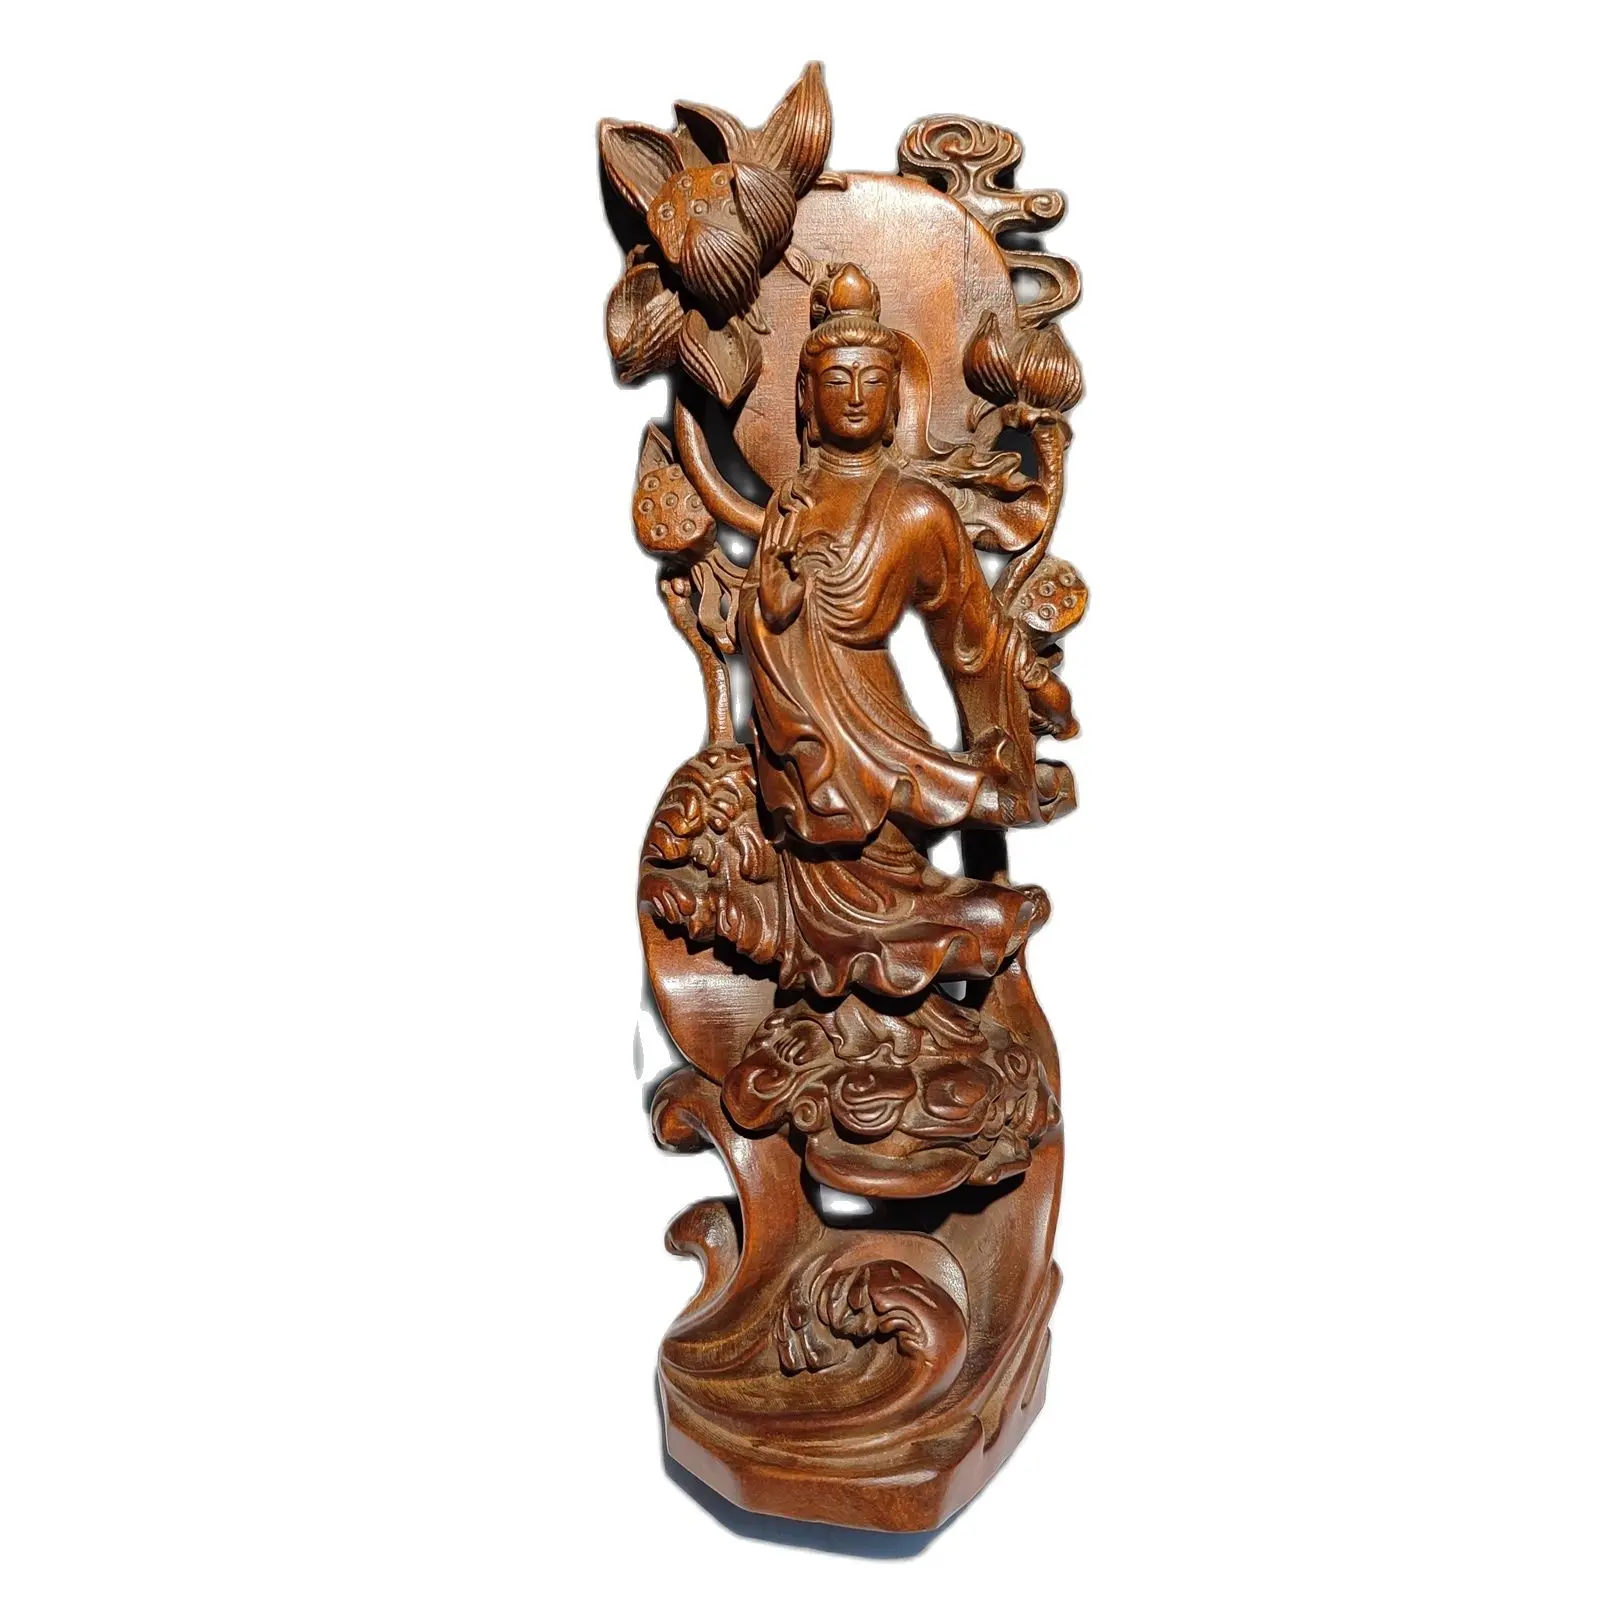 

Деревянная статуя для украшения дома, скульптуры quan Boxwood Free kwan yin, статуэтка